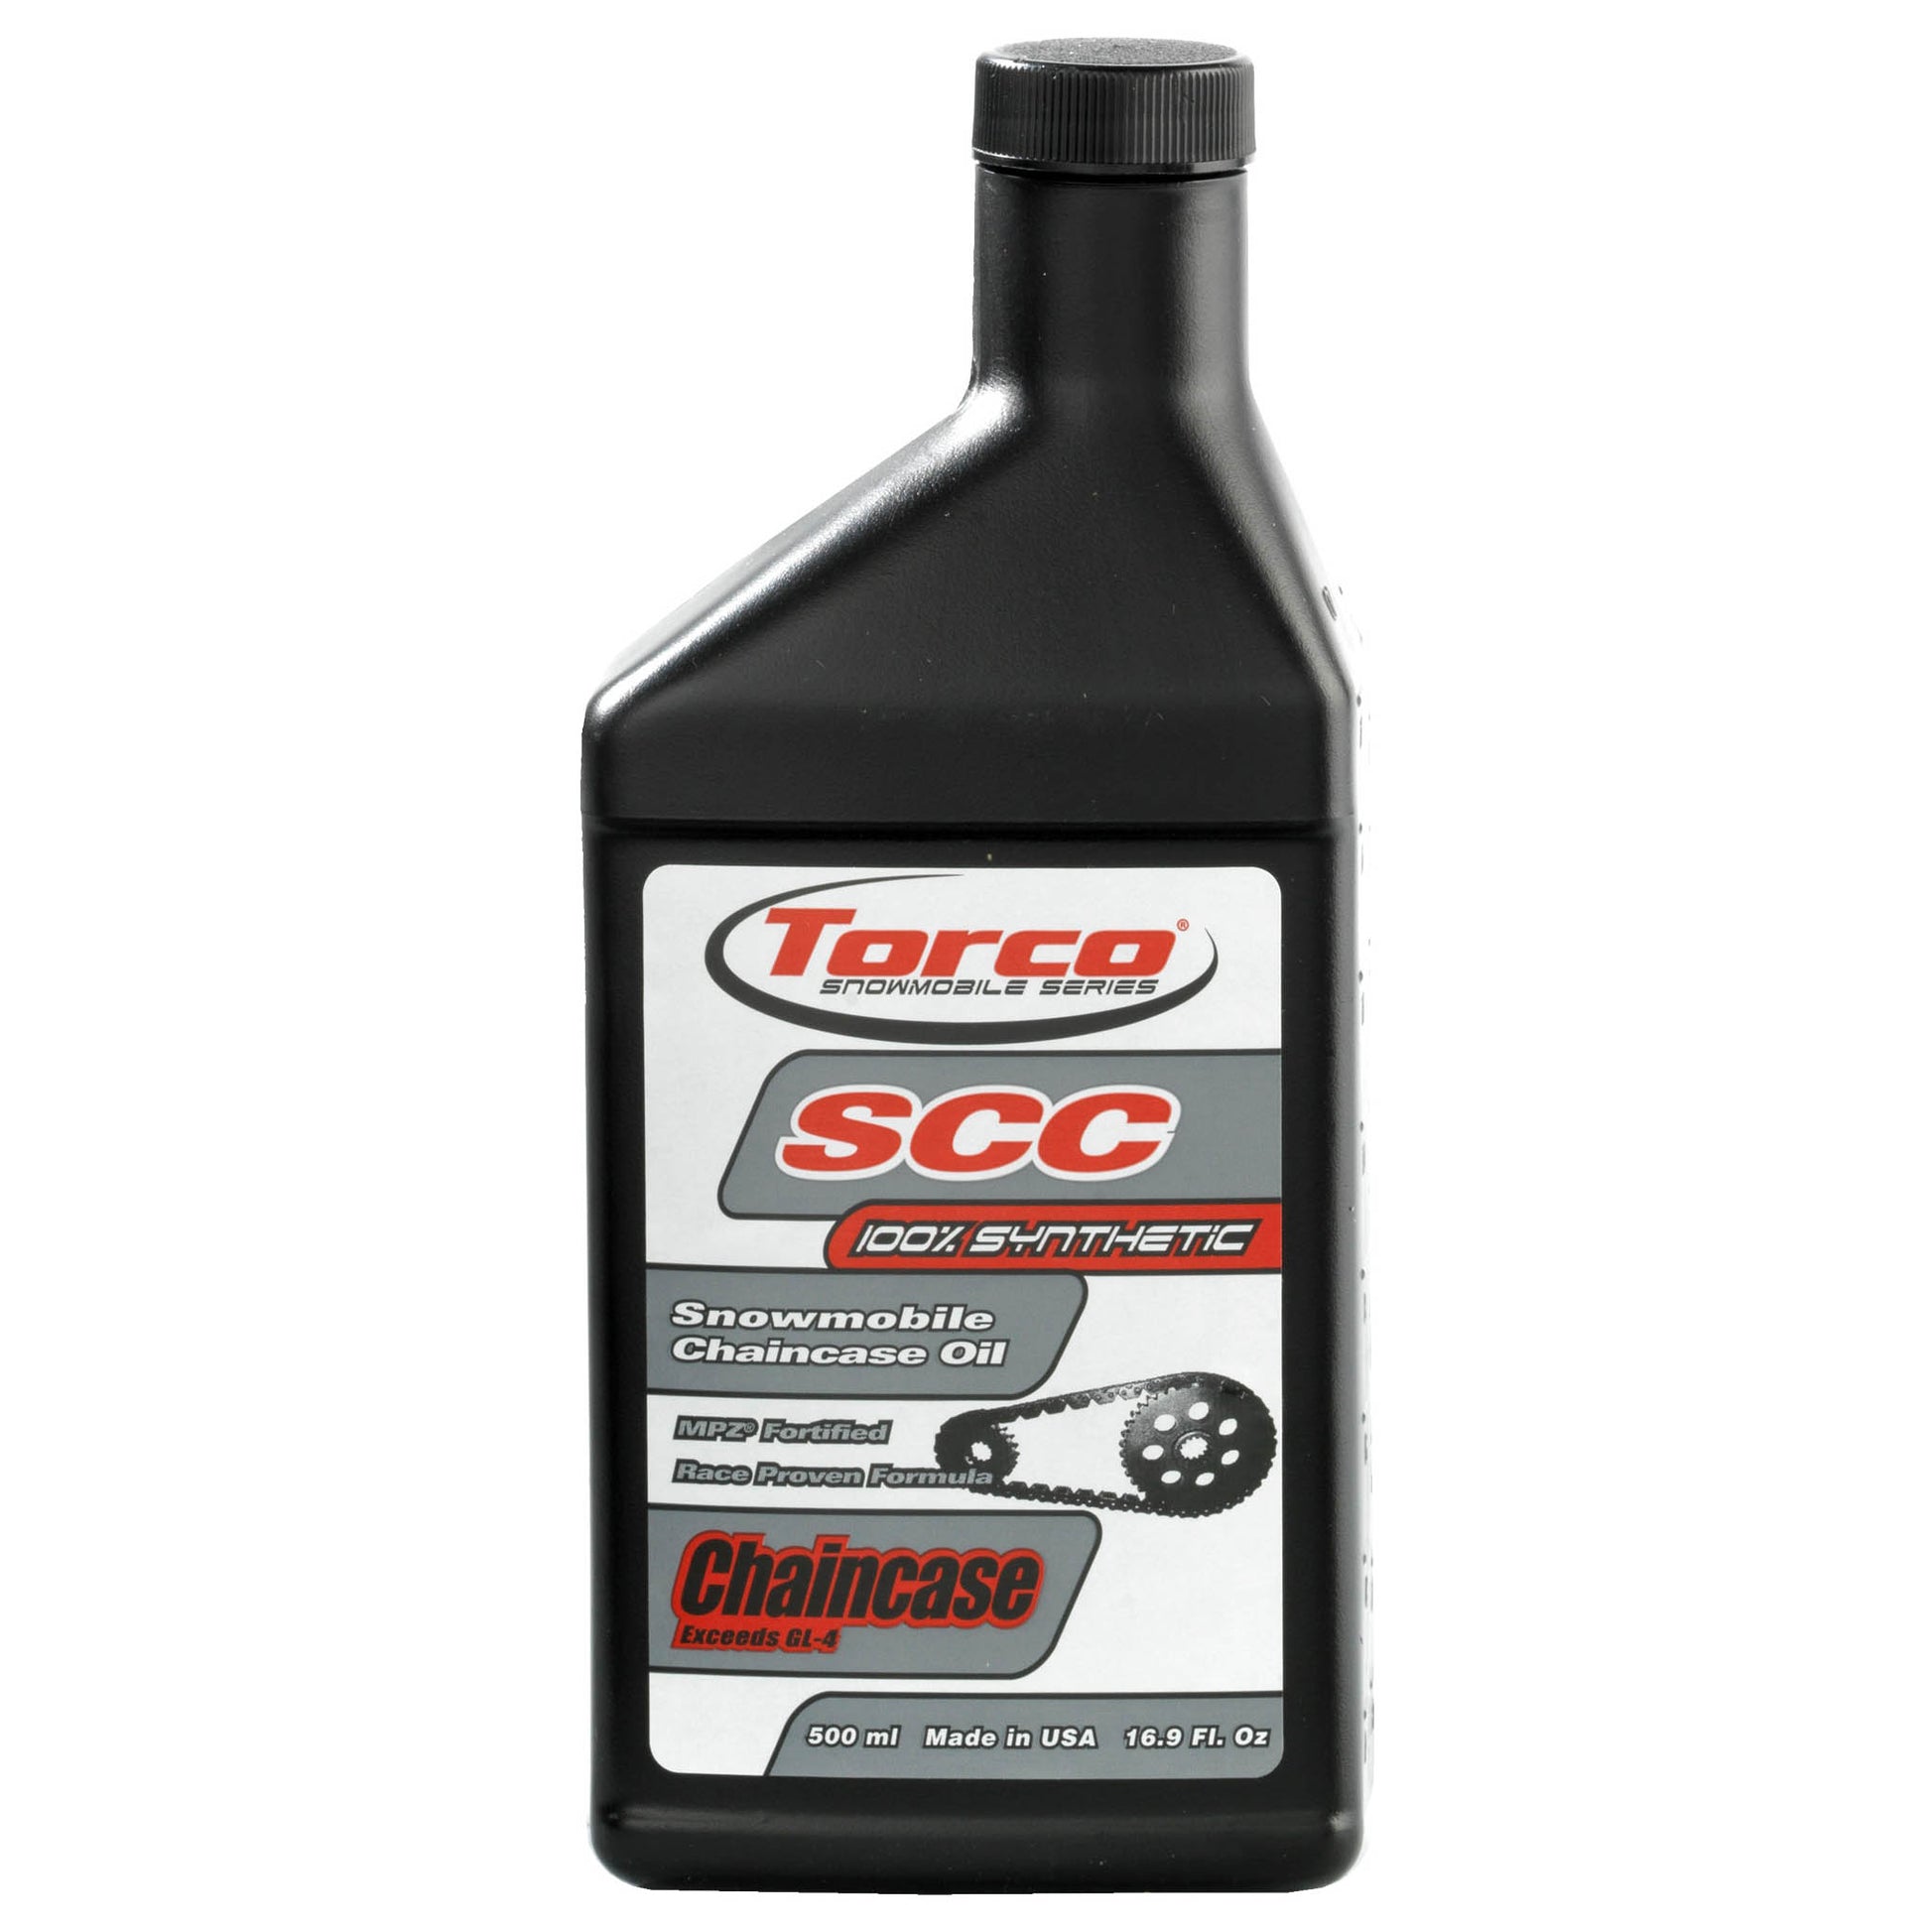 Torco SCC Snowmobile Chaincase Oil